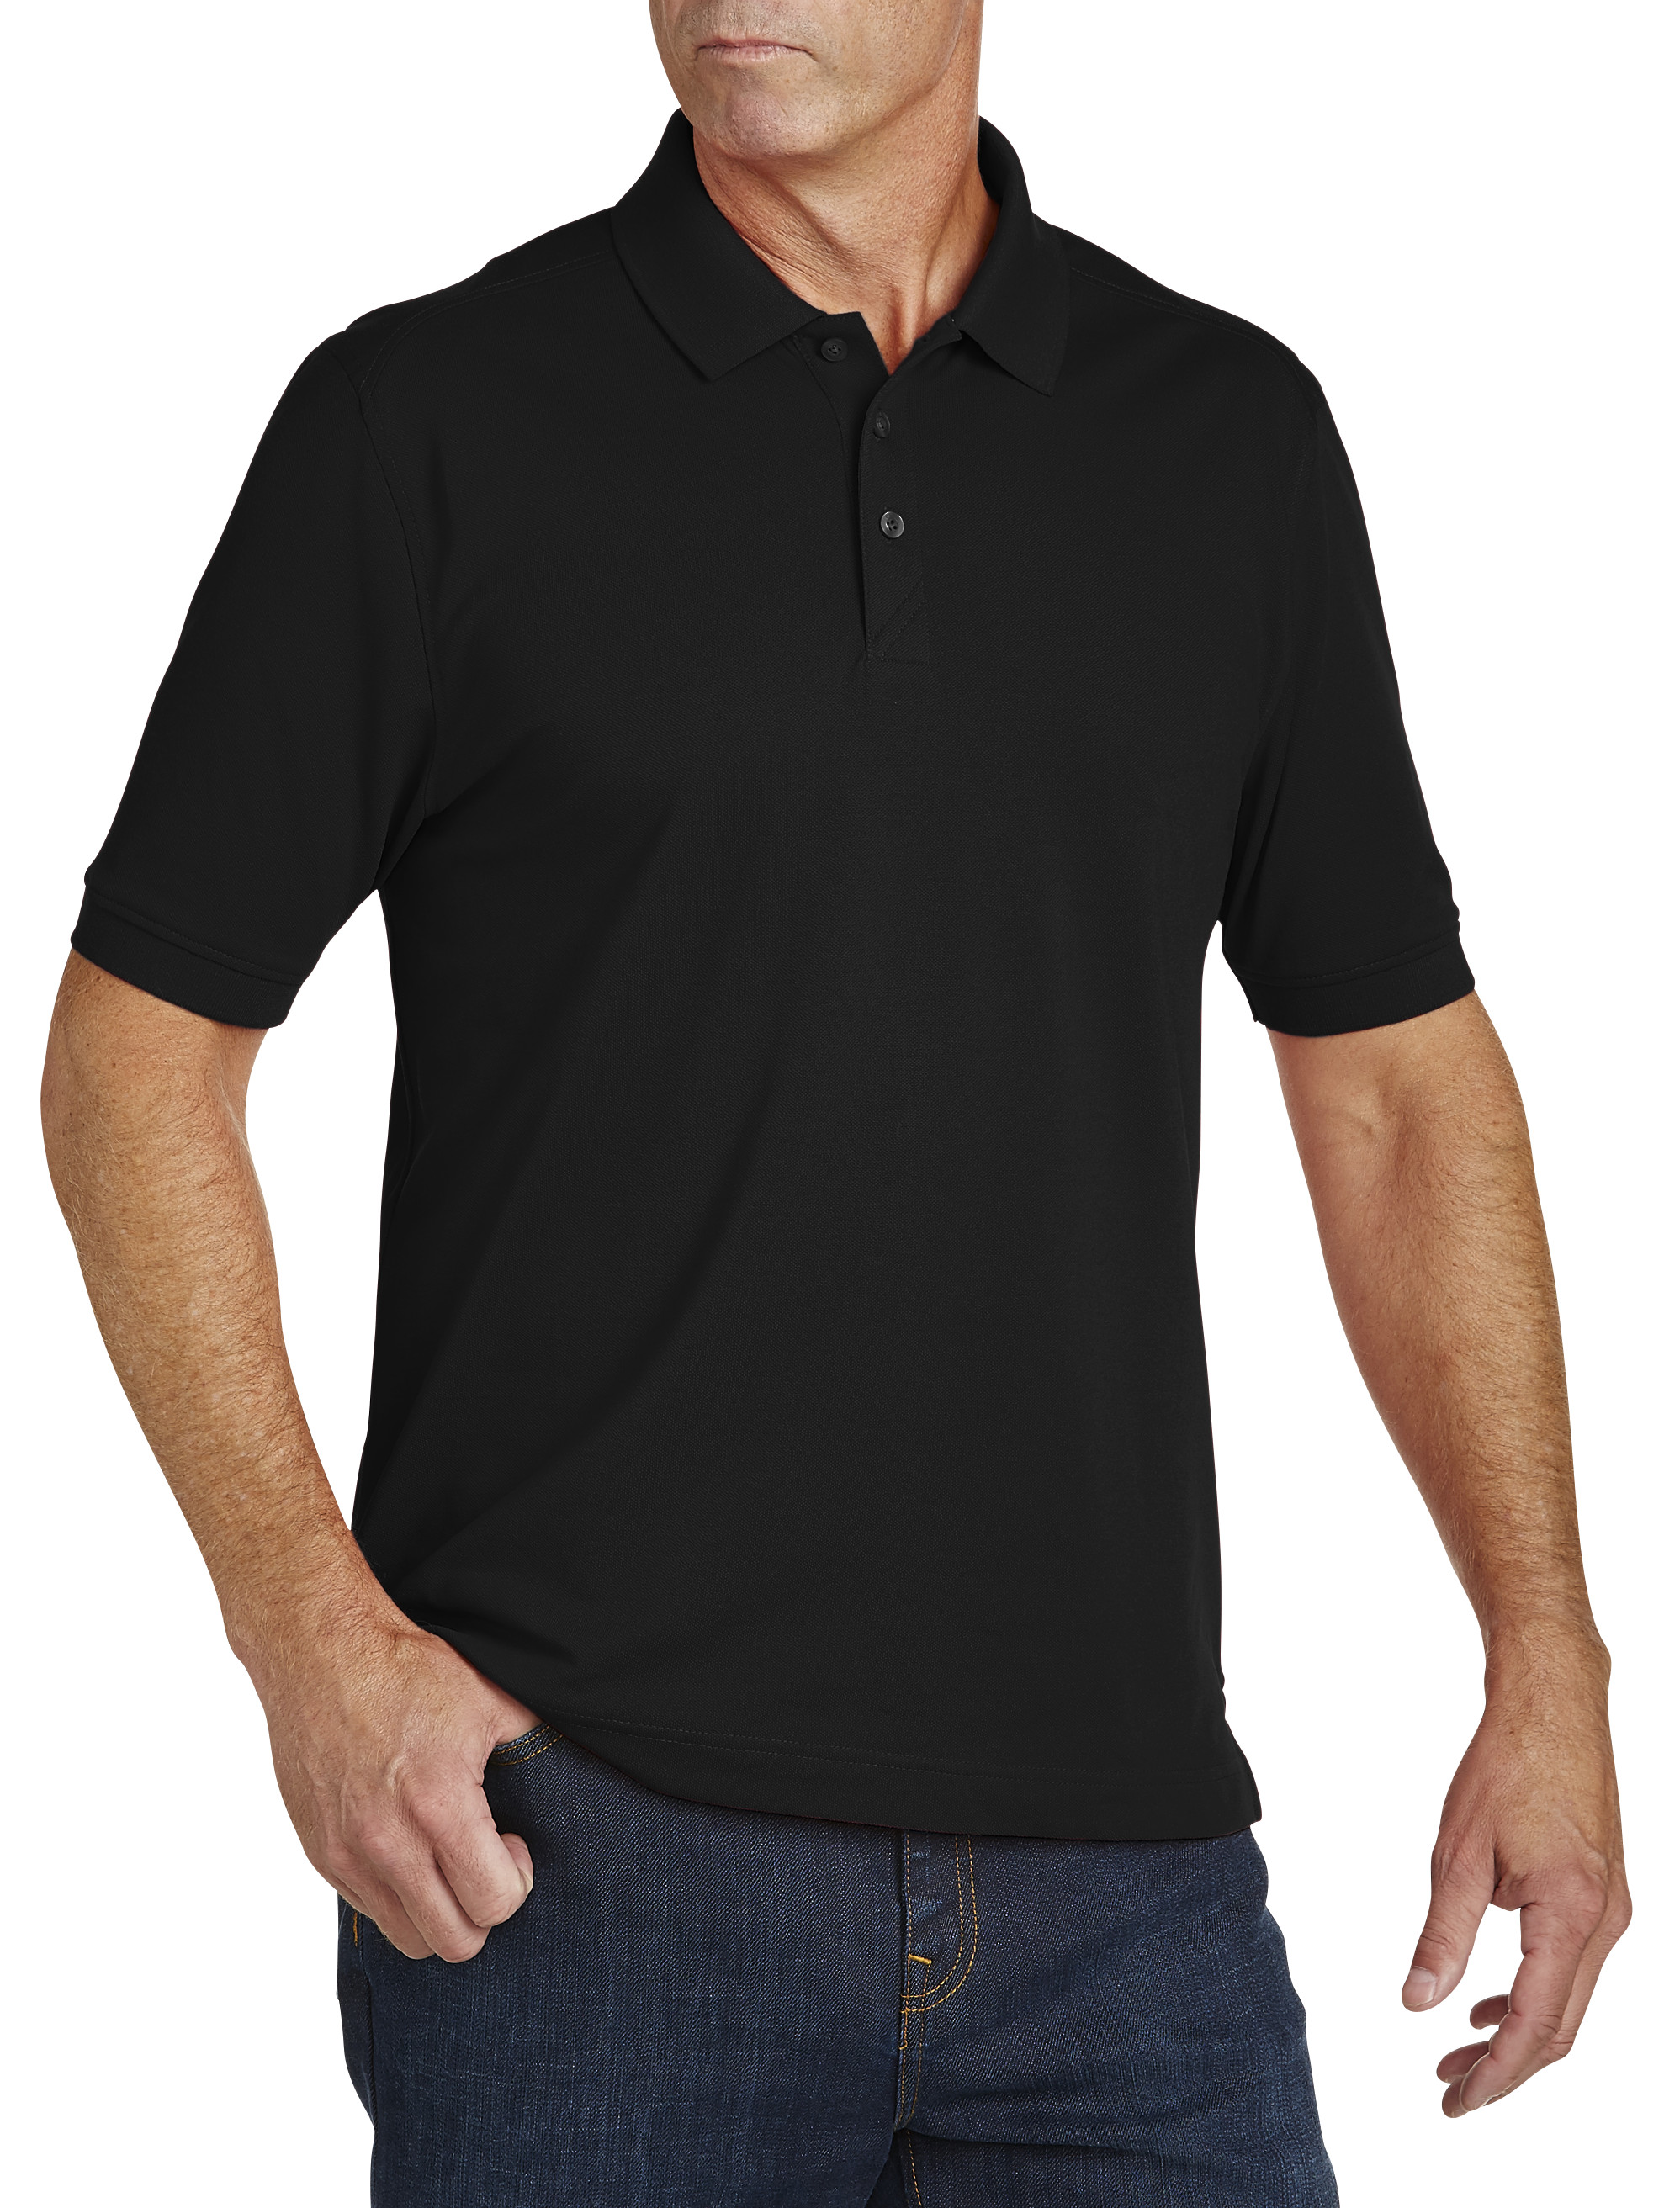 CB DryTec Advantage Polo Shirt